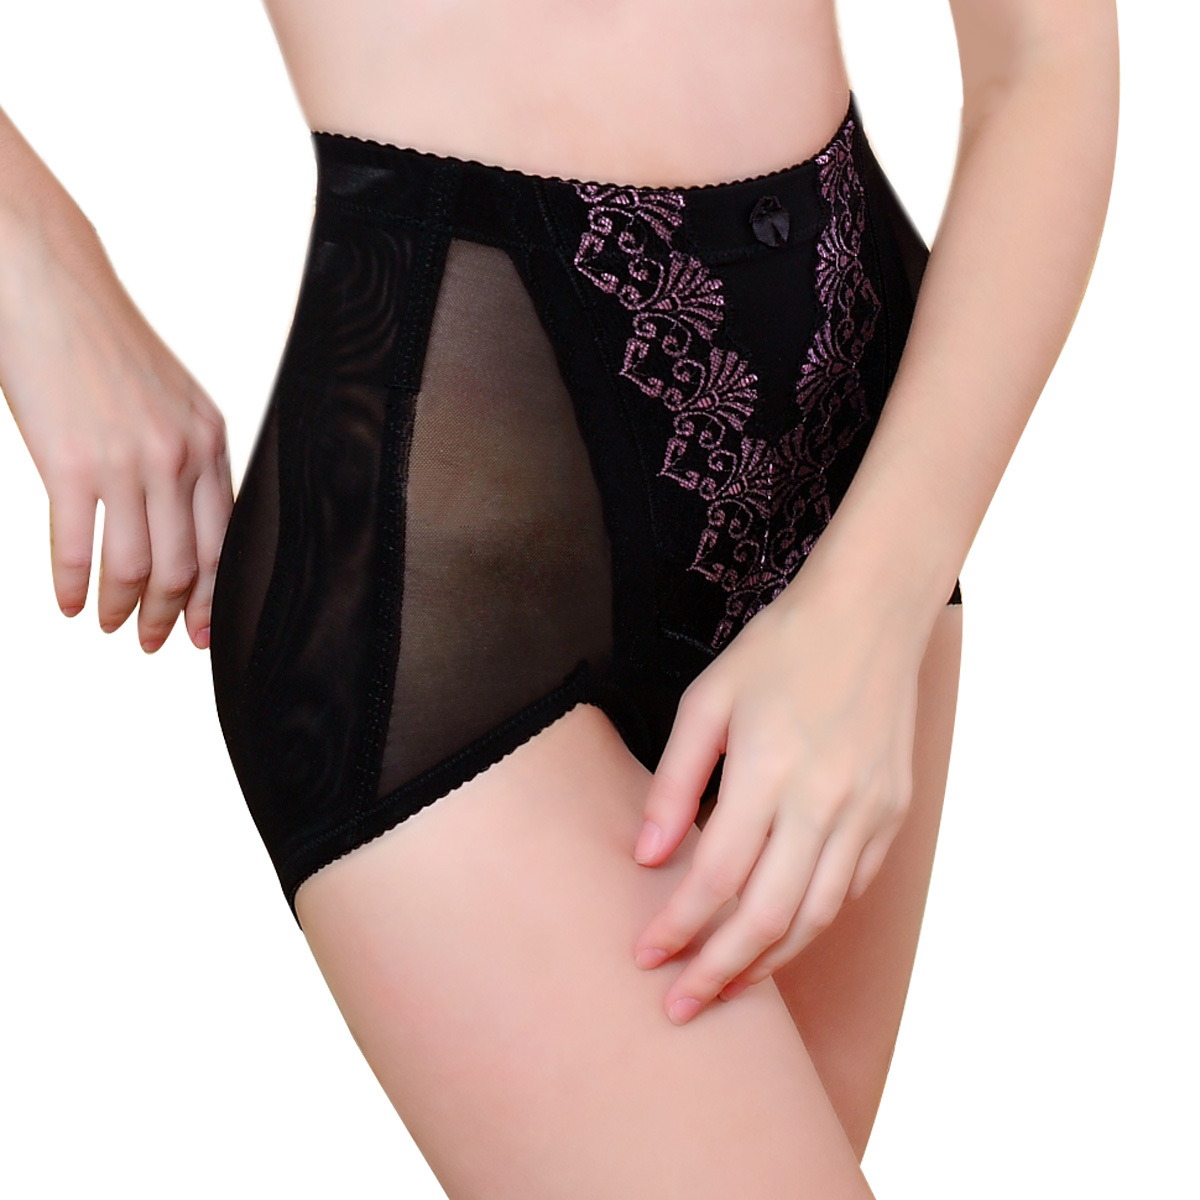 Silk protein fabric trigonometric abdomen drawing butt-lifting pants corset pants body shaping underwear